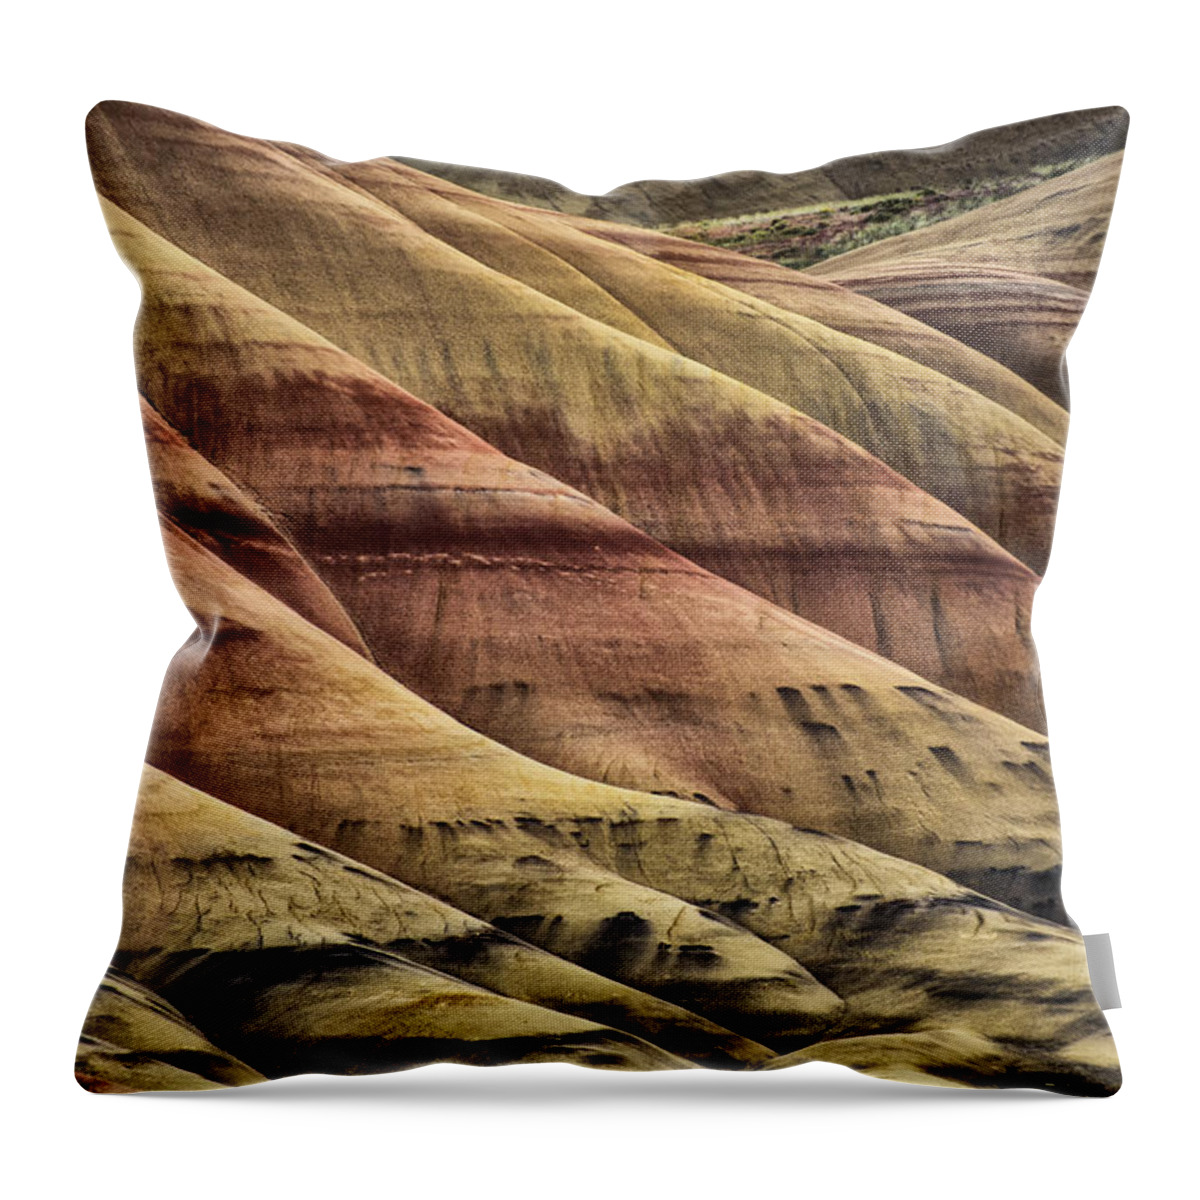 Hills Throw Pillow featuring the photograph Patterns by Erika Fawcett